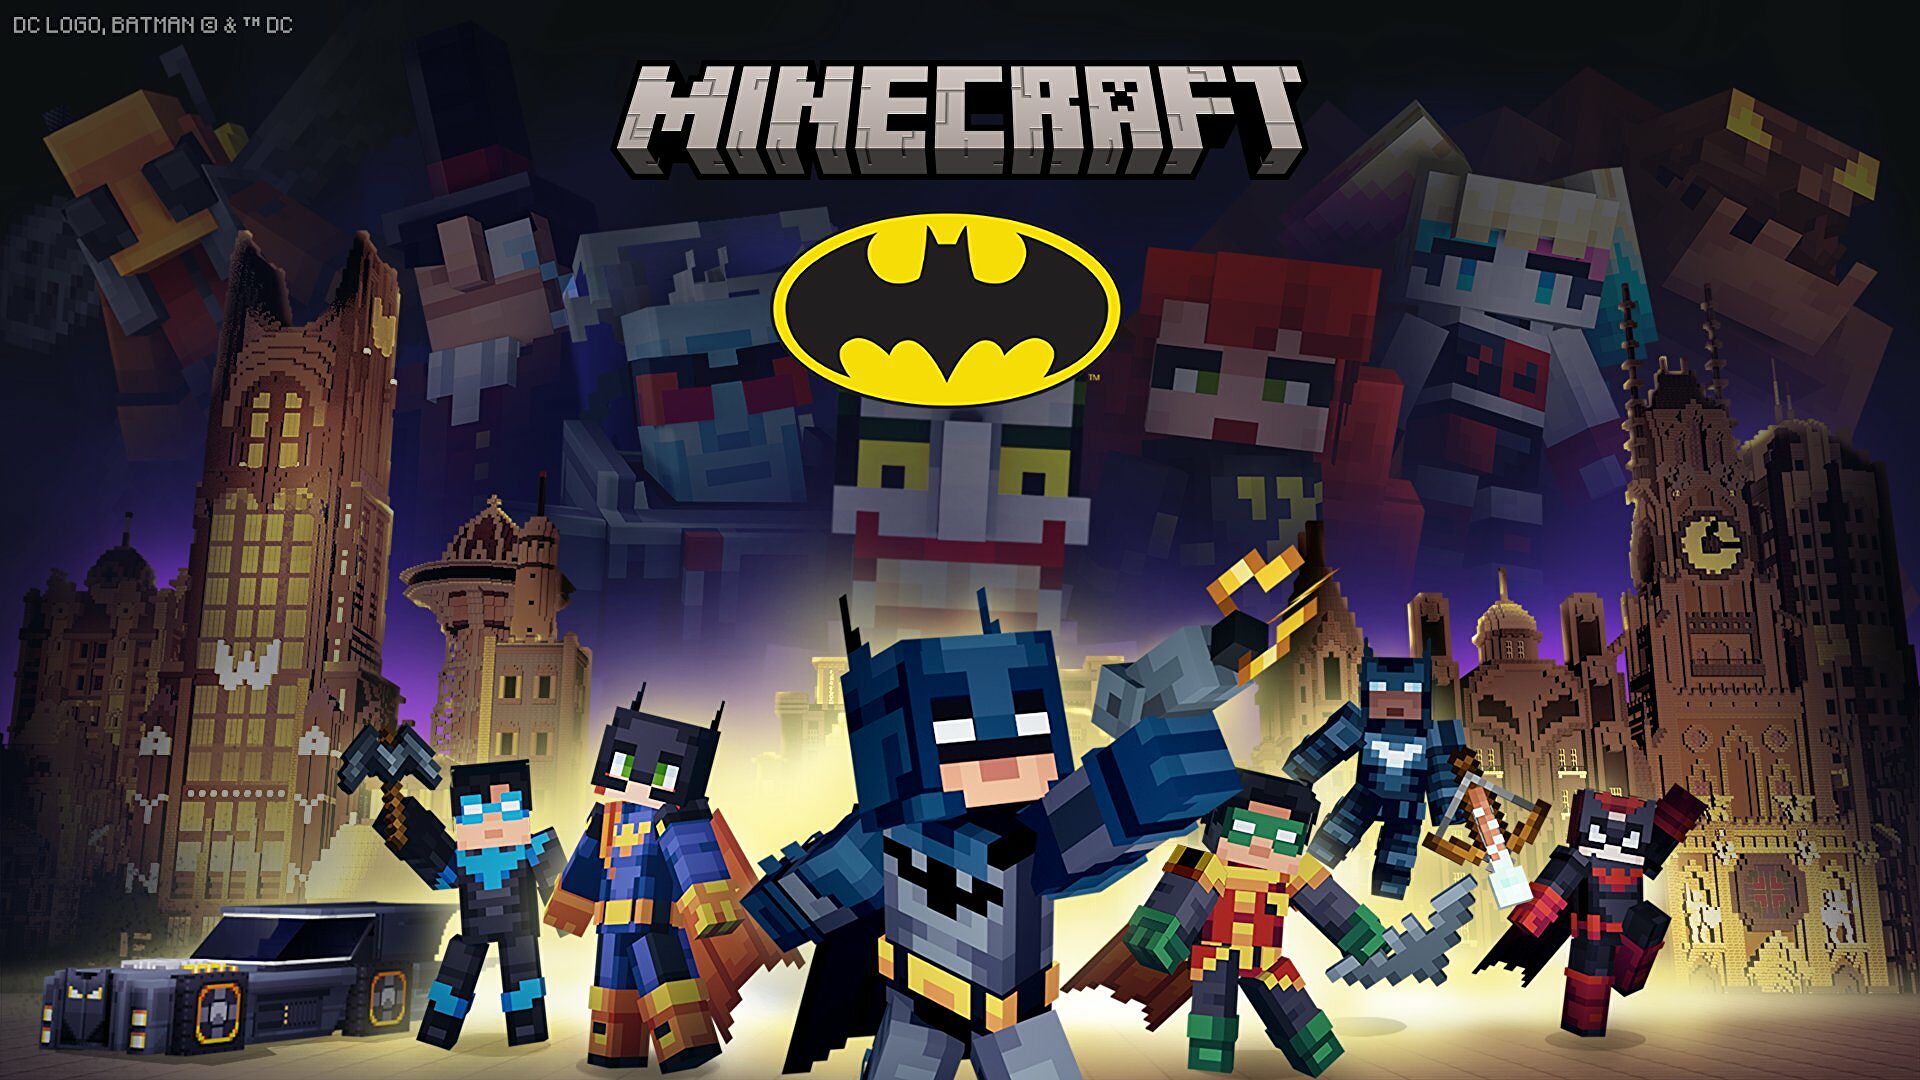 Minecraft is getting Batman DLC next week, including Gotham and many villains